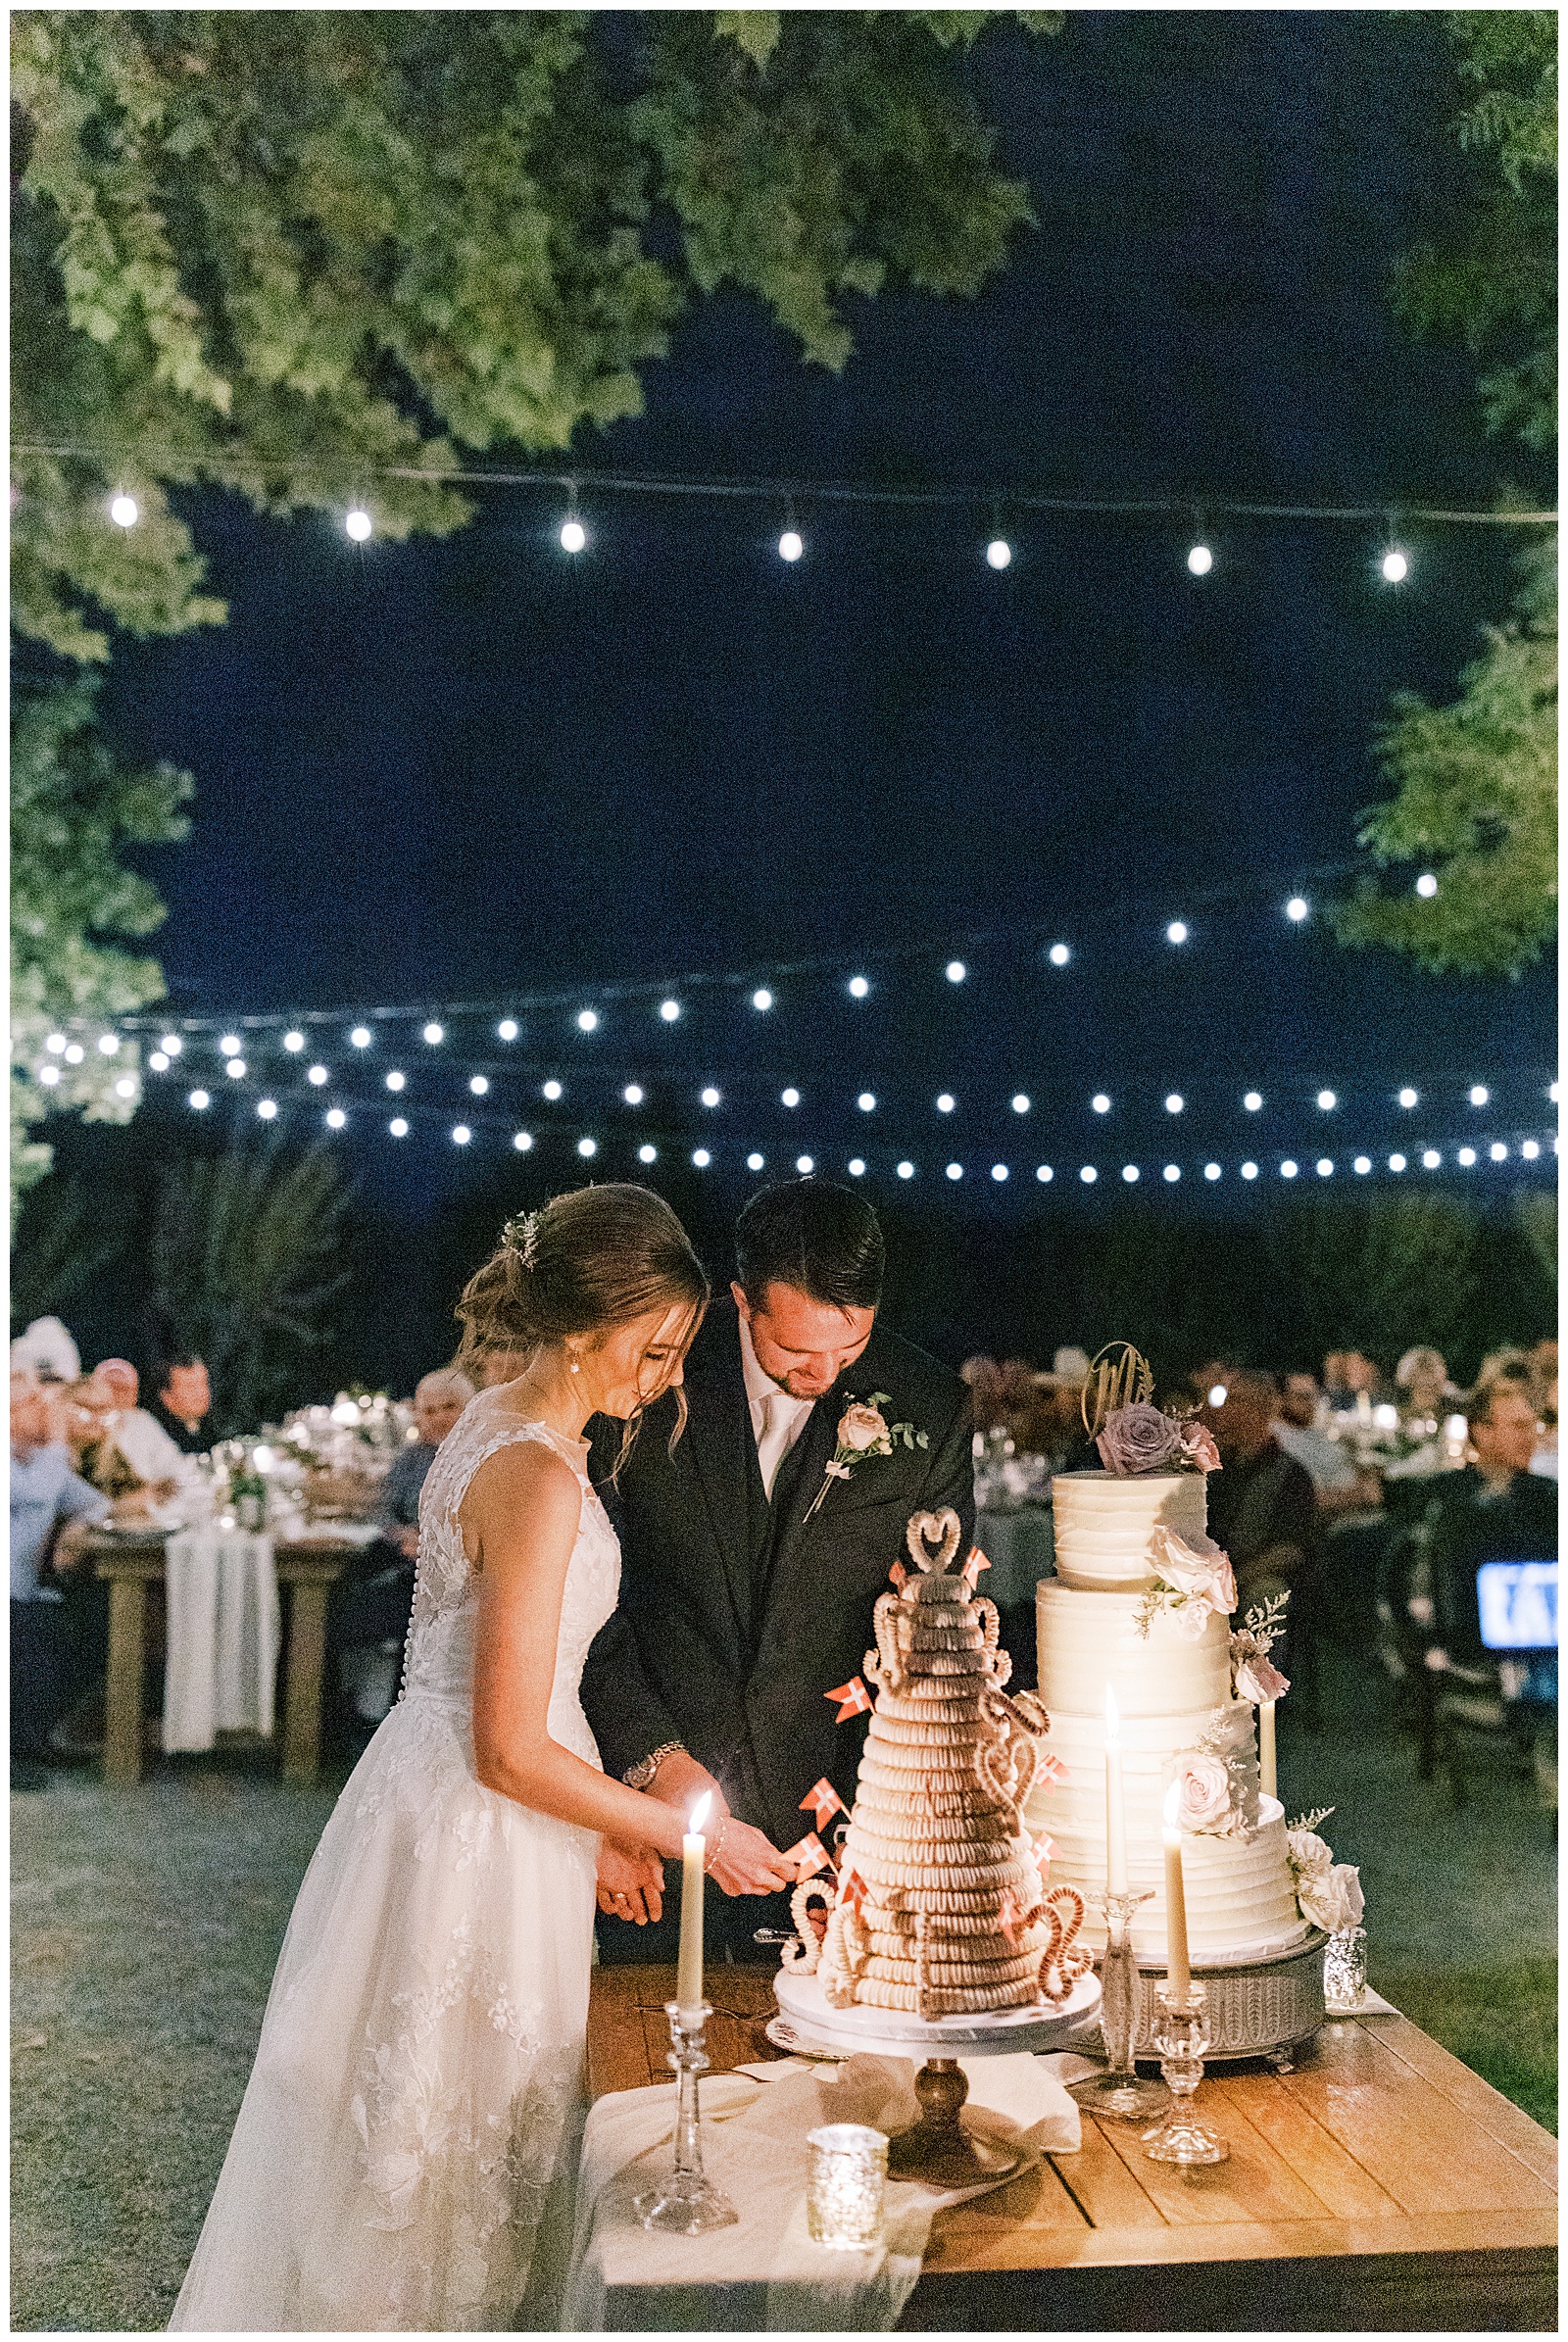 grainy image bride and groom cutting wedding cake backyard wedding